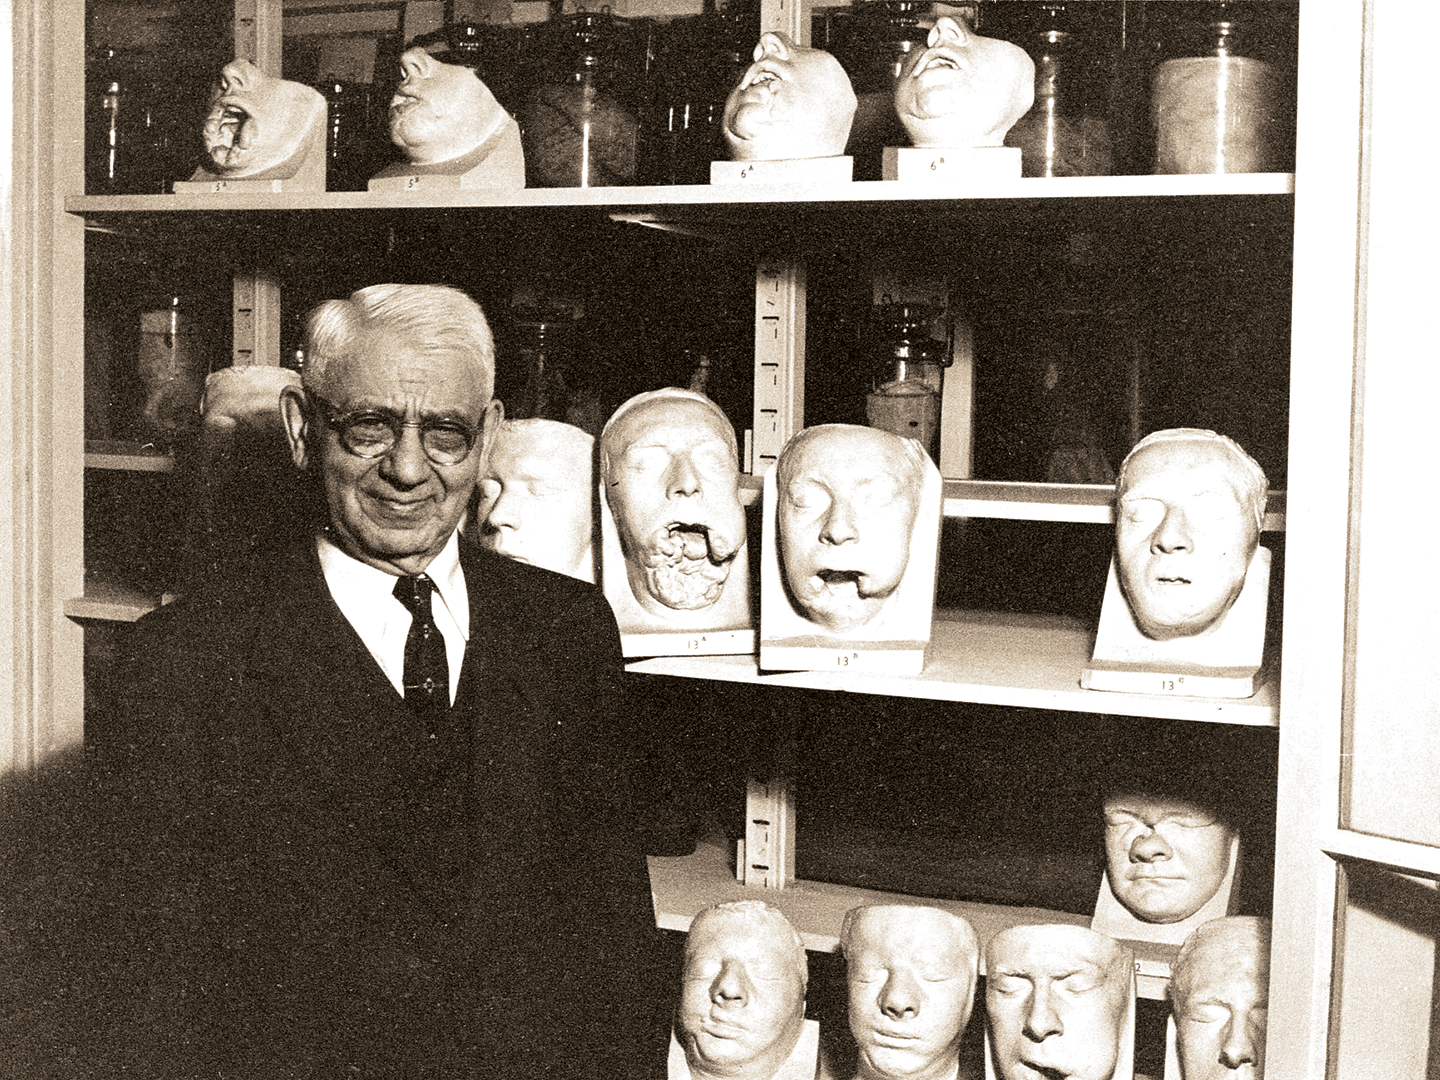 Dr. Varaztad Kazanjian, pioneer of plastic surgery